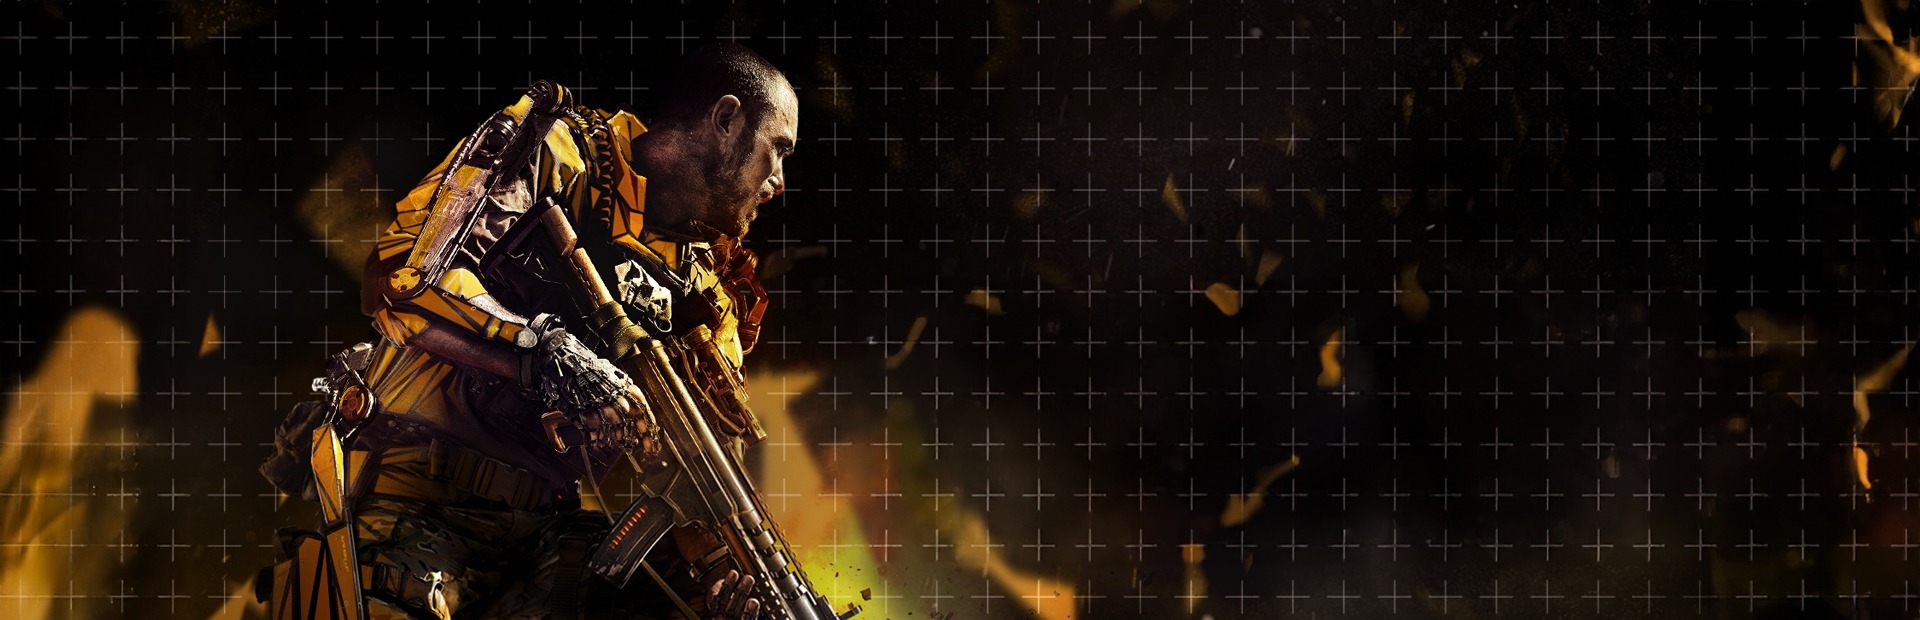 Call of Duty: Advanced Warfare - Gold Edition. Call of Duty: Advanced Warfare (2014). Advanced Warfare системные требования. Обои Мичела из коловвдюти.